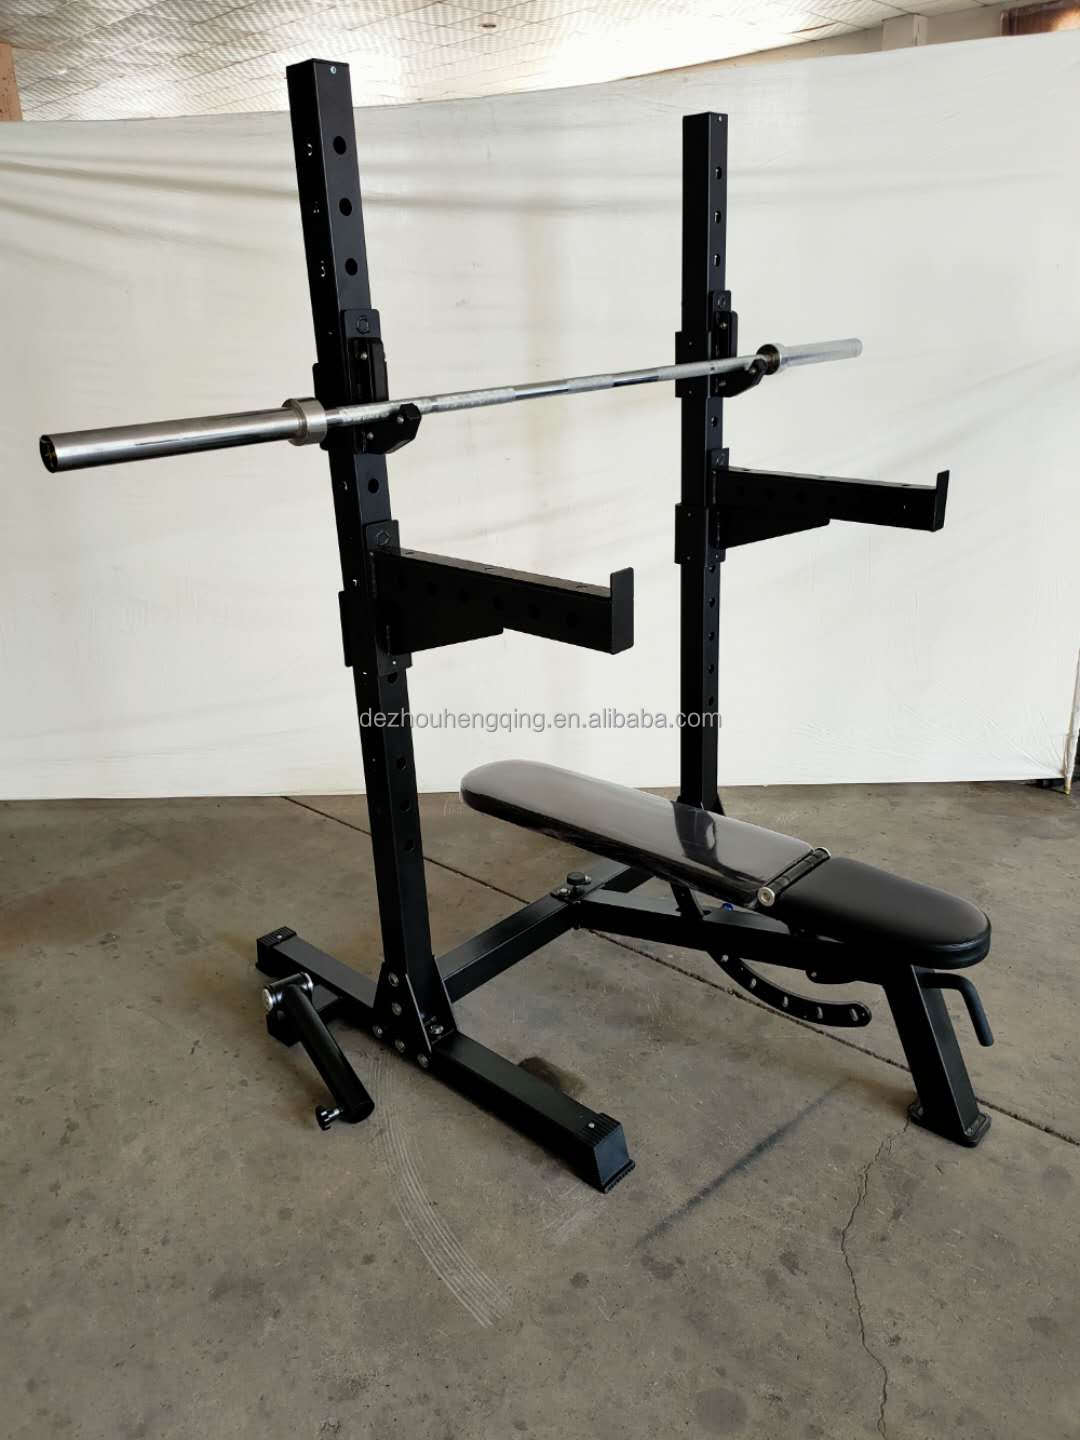 Home Gym Machines Fitness Equipment Dual Adjustable Bench Press Combed Half Rack